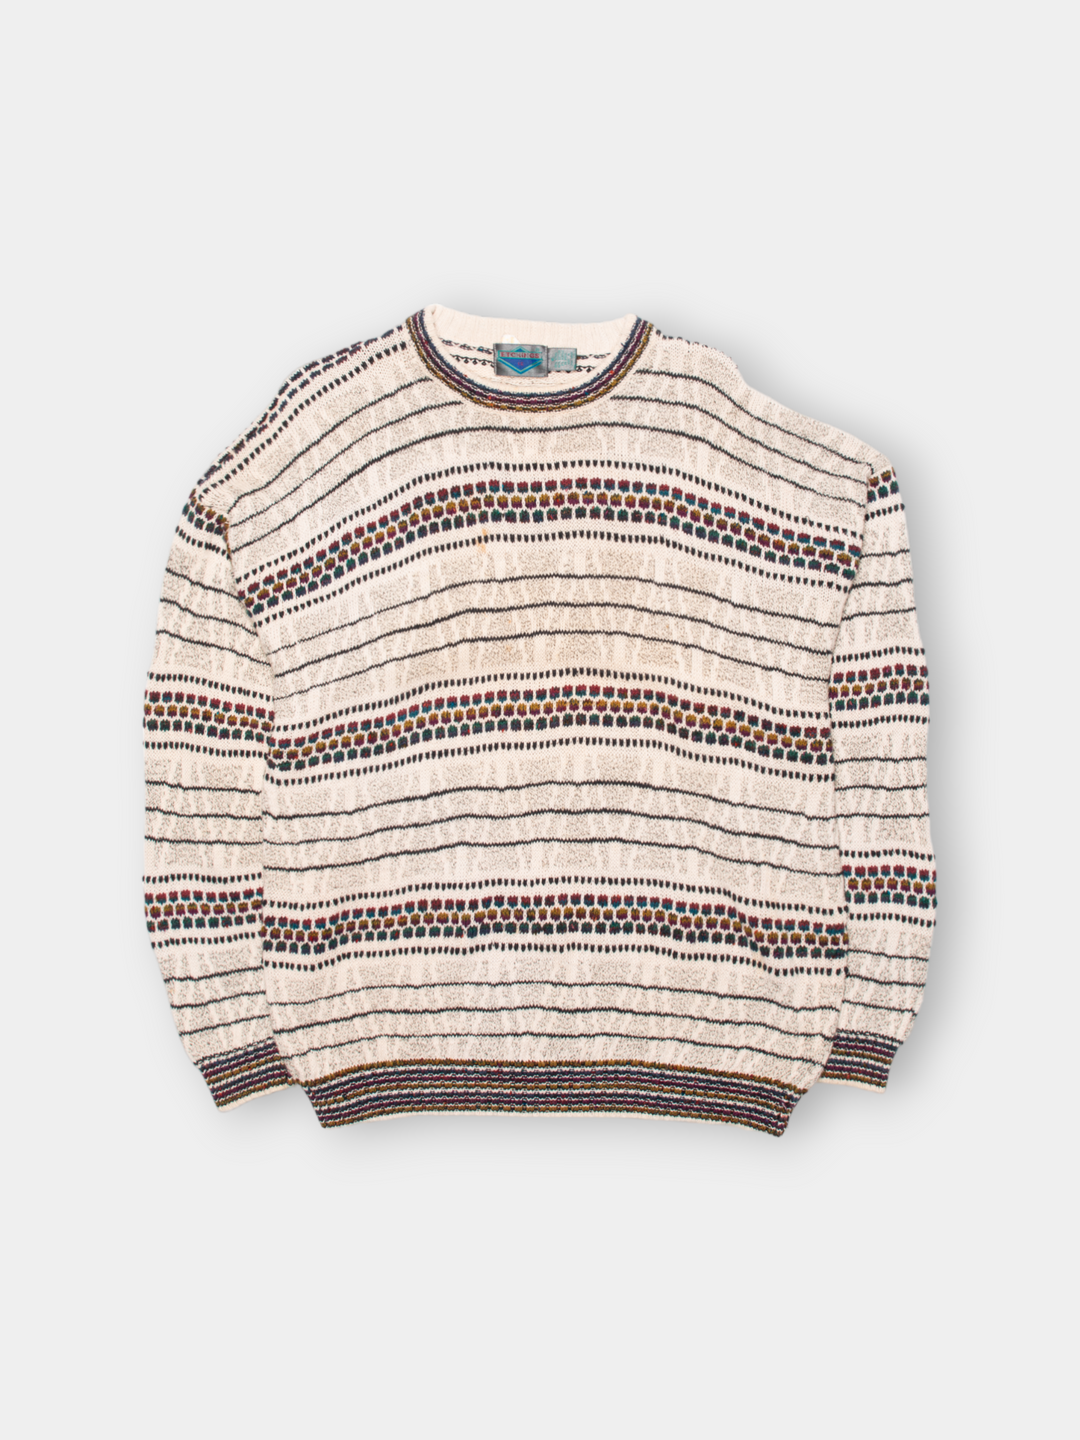 90s Coogi Style Sweater (XL)